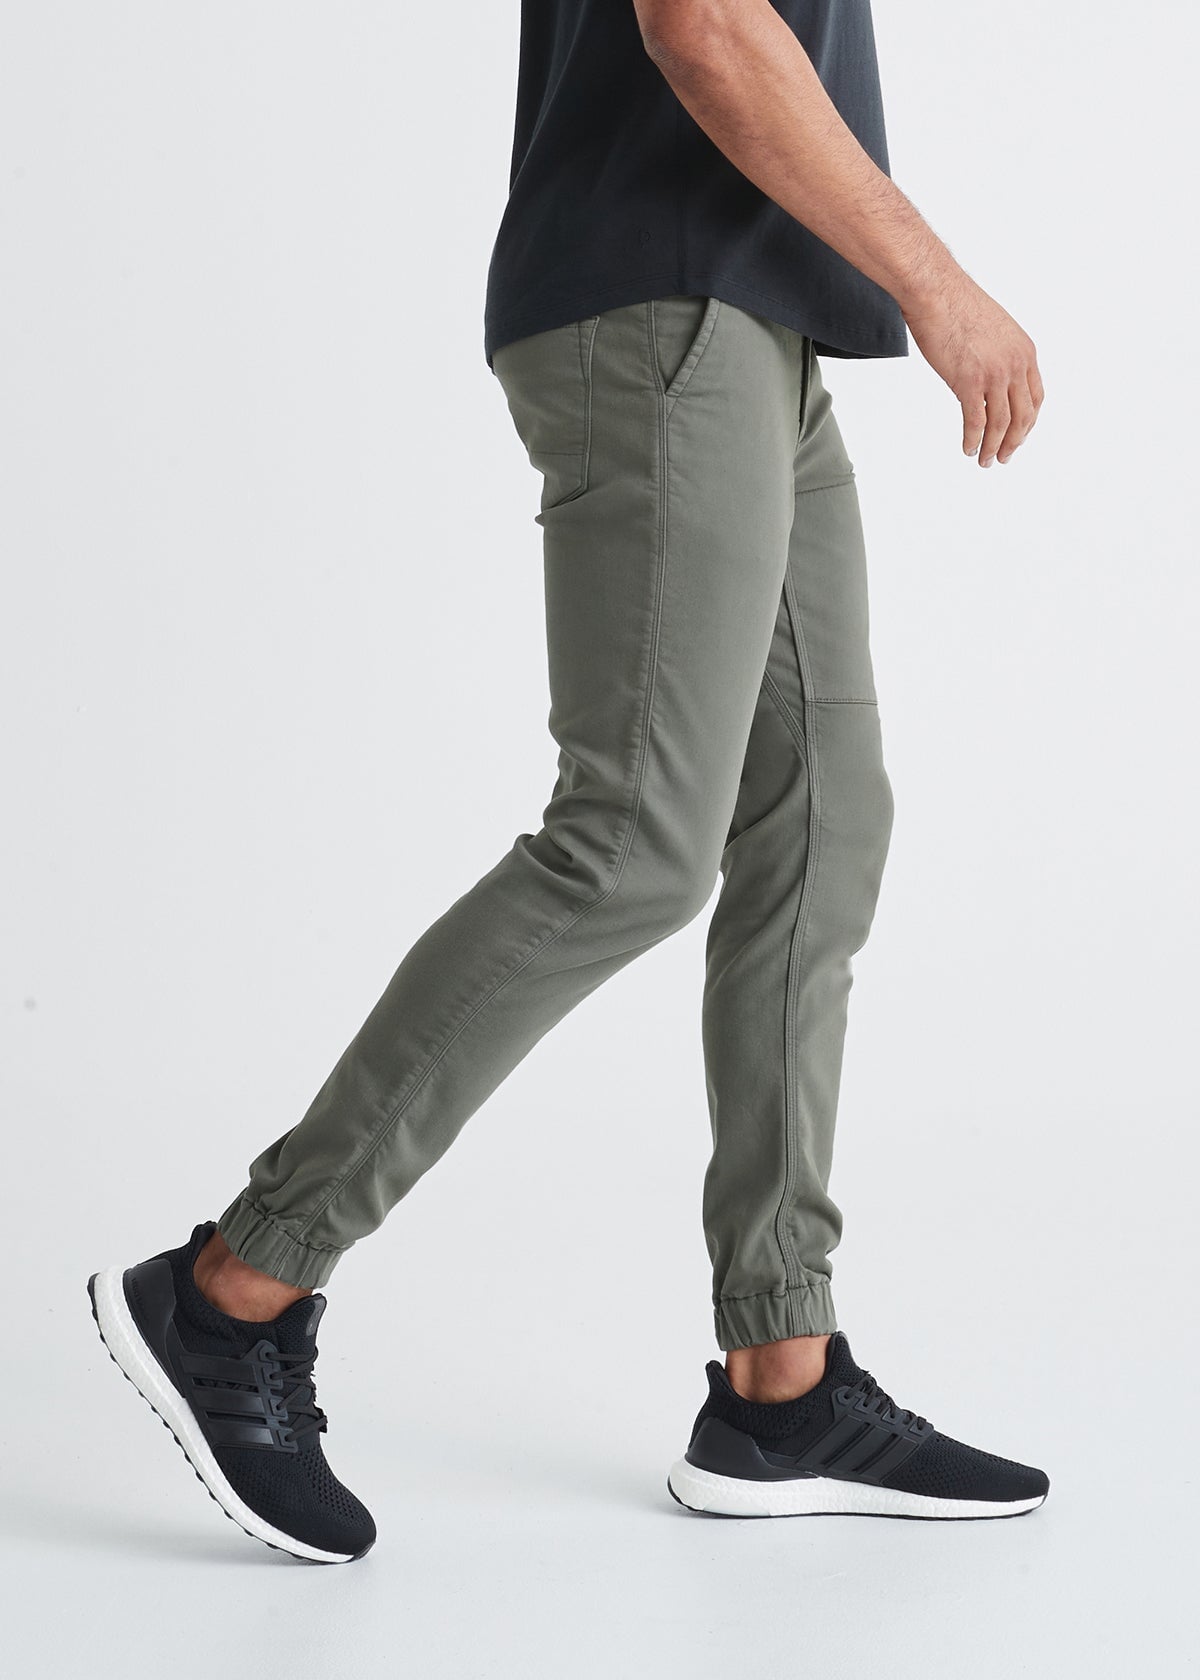 Light Green Warm-up pants